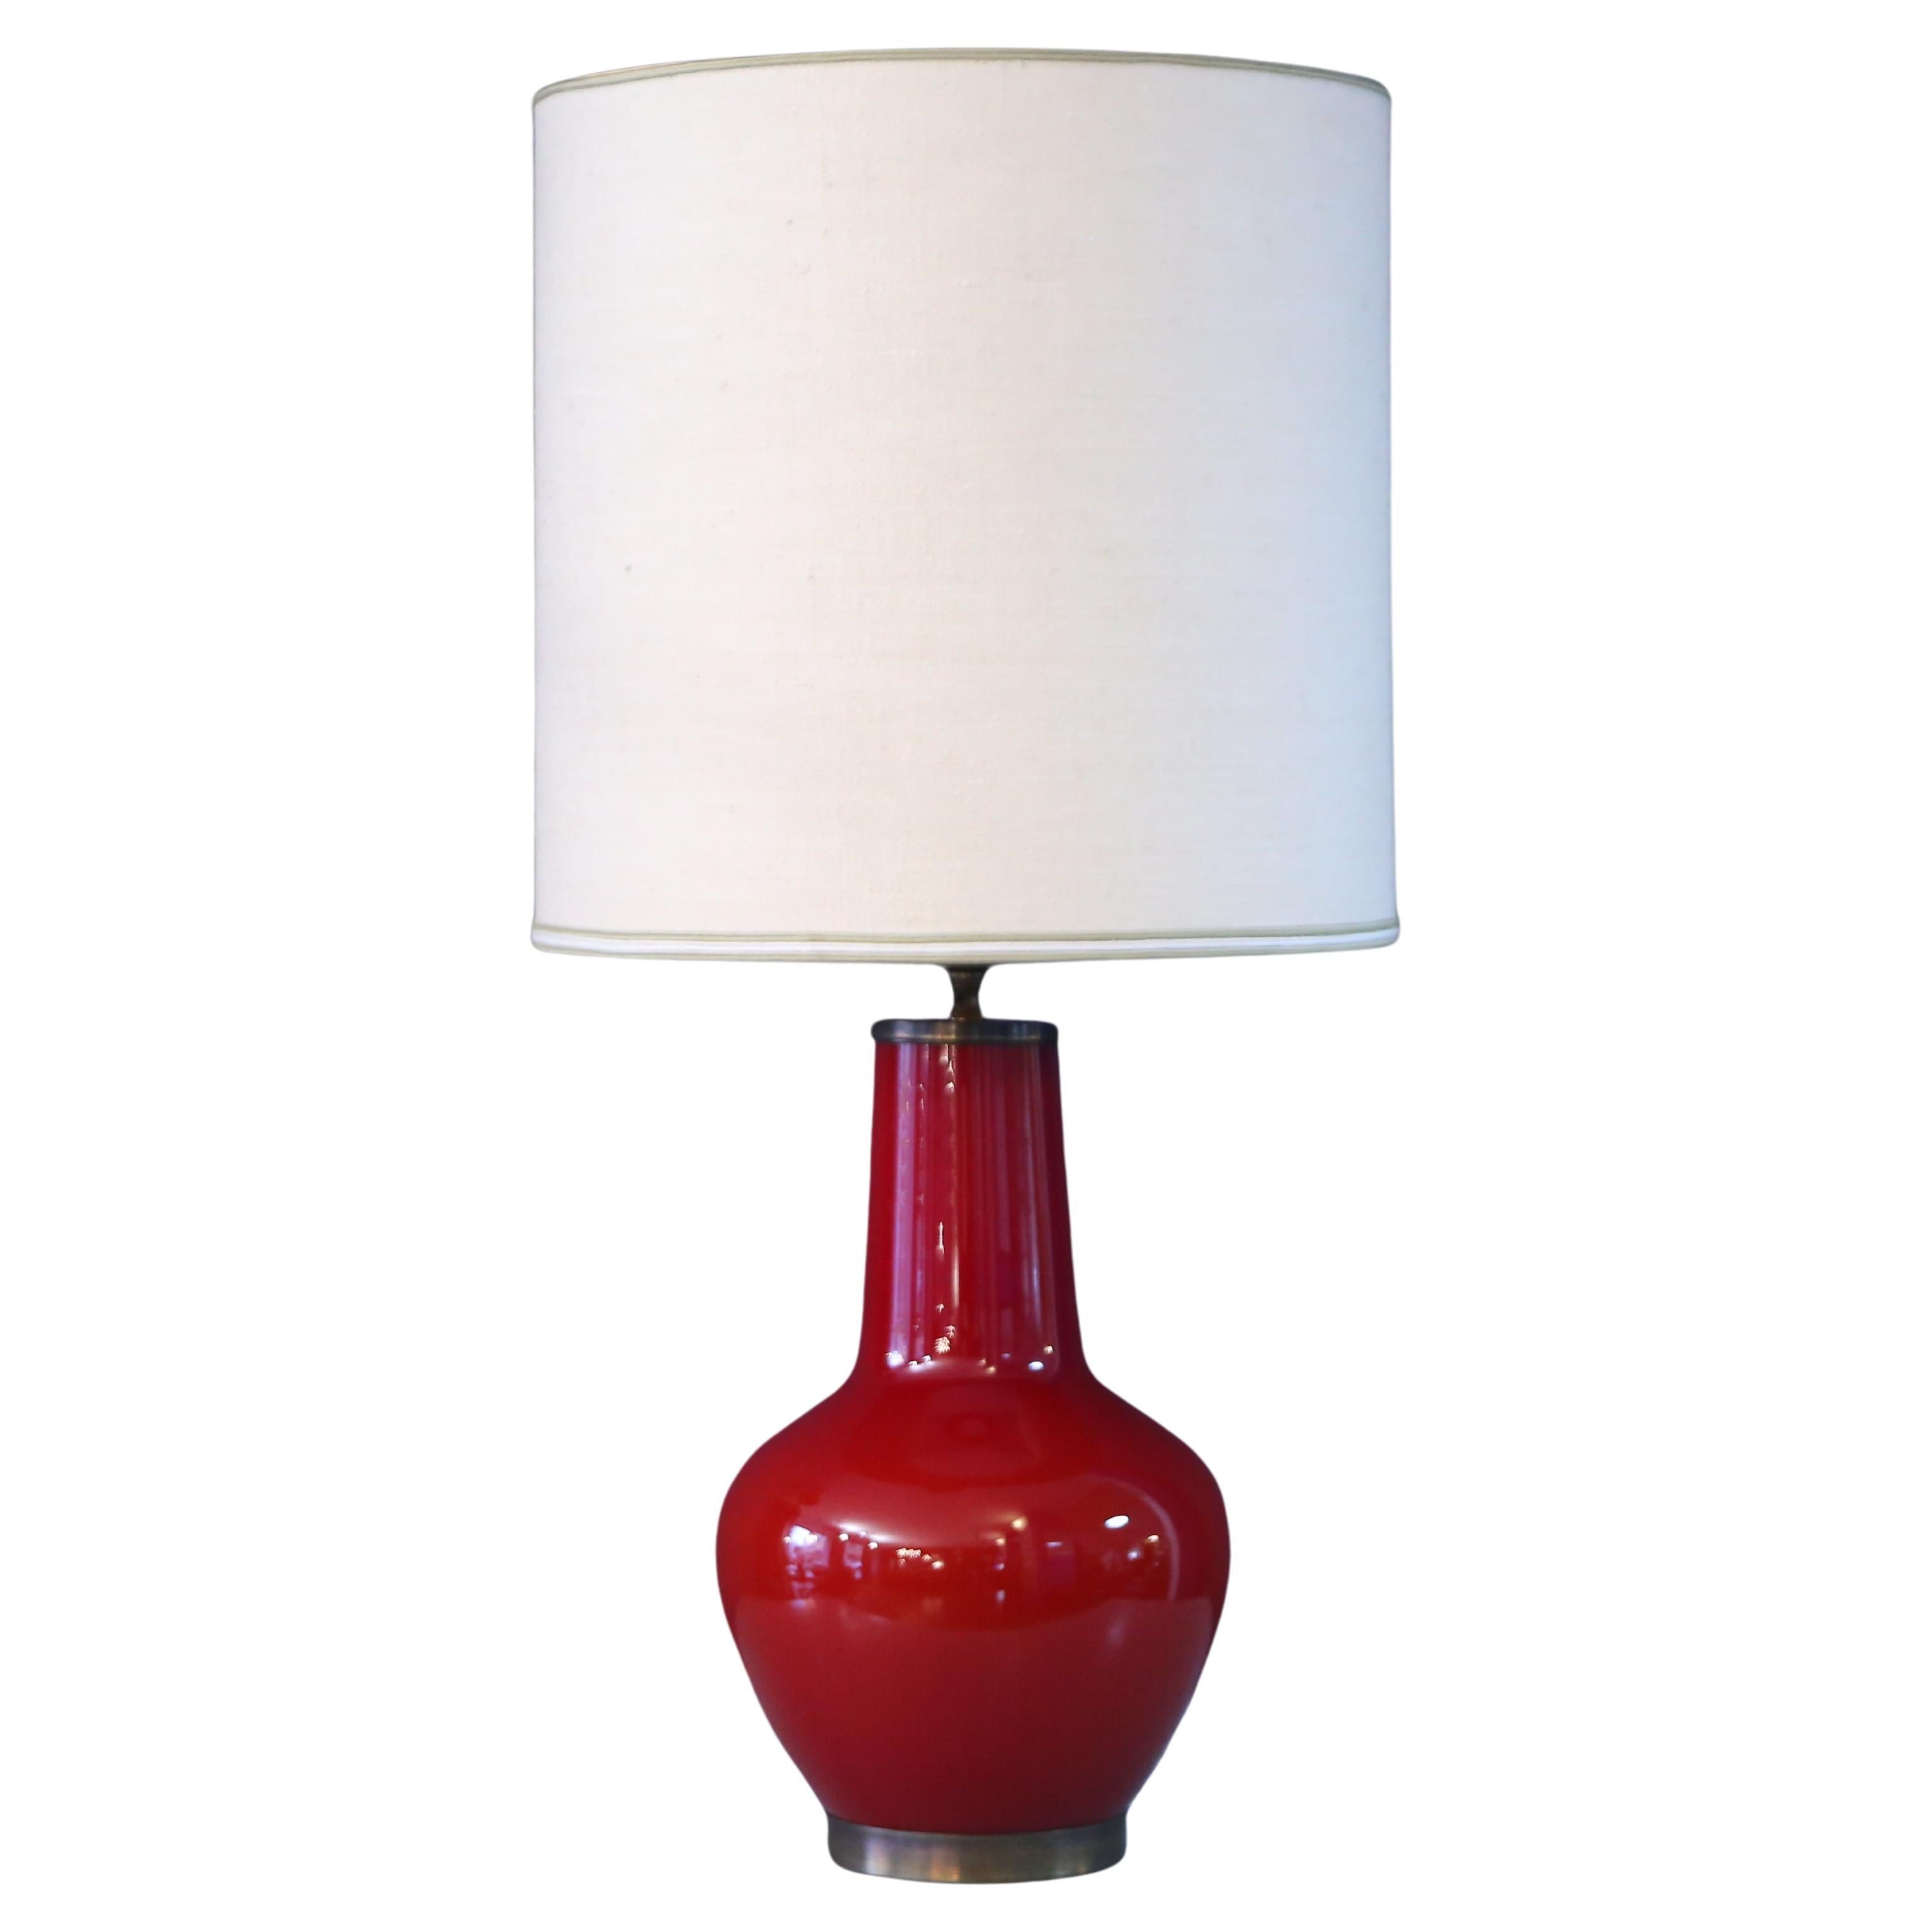 Stilnovo Table Lamp from the 50s